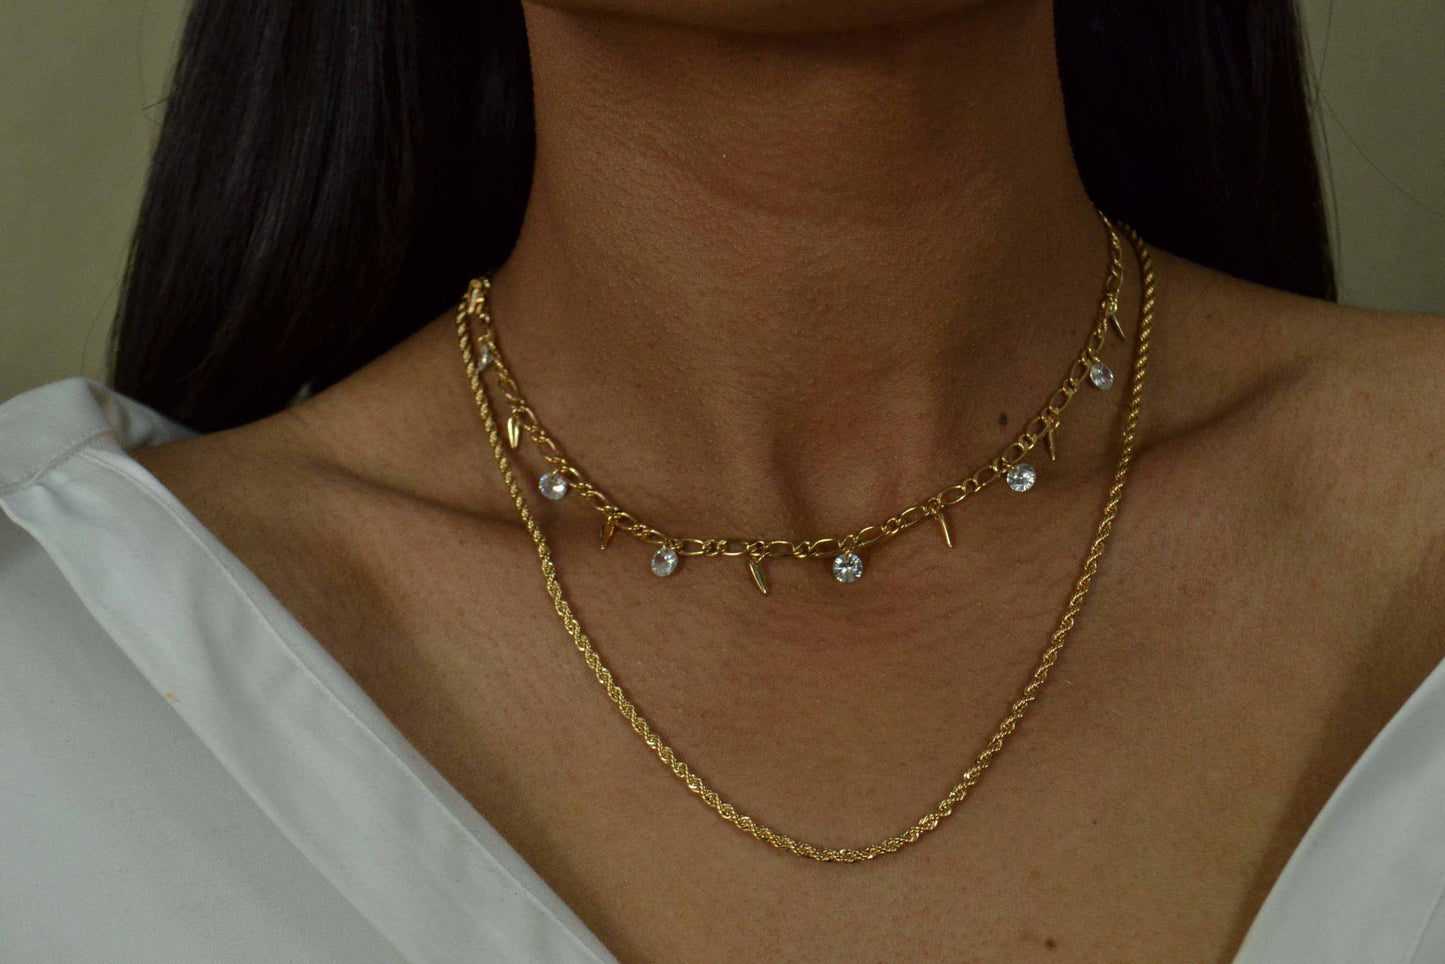 Angela necklace displayed on model